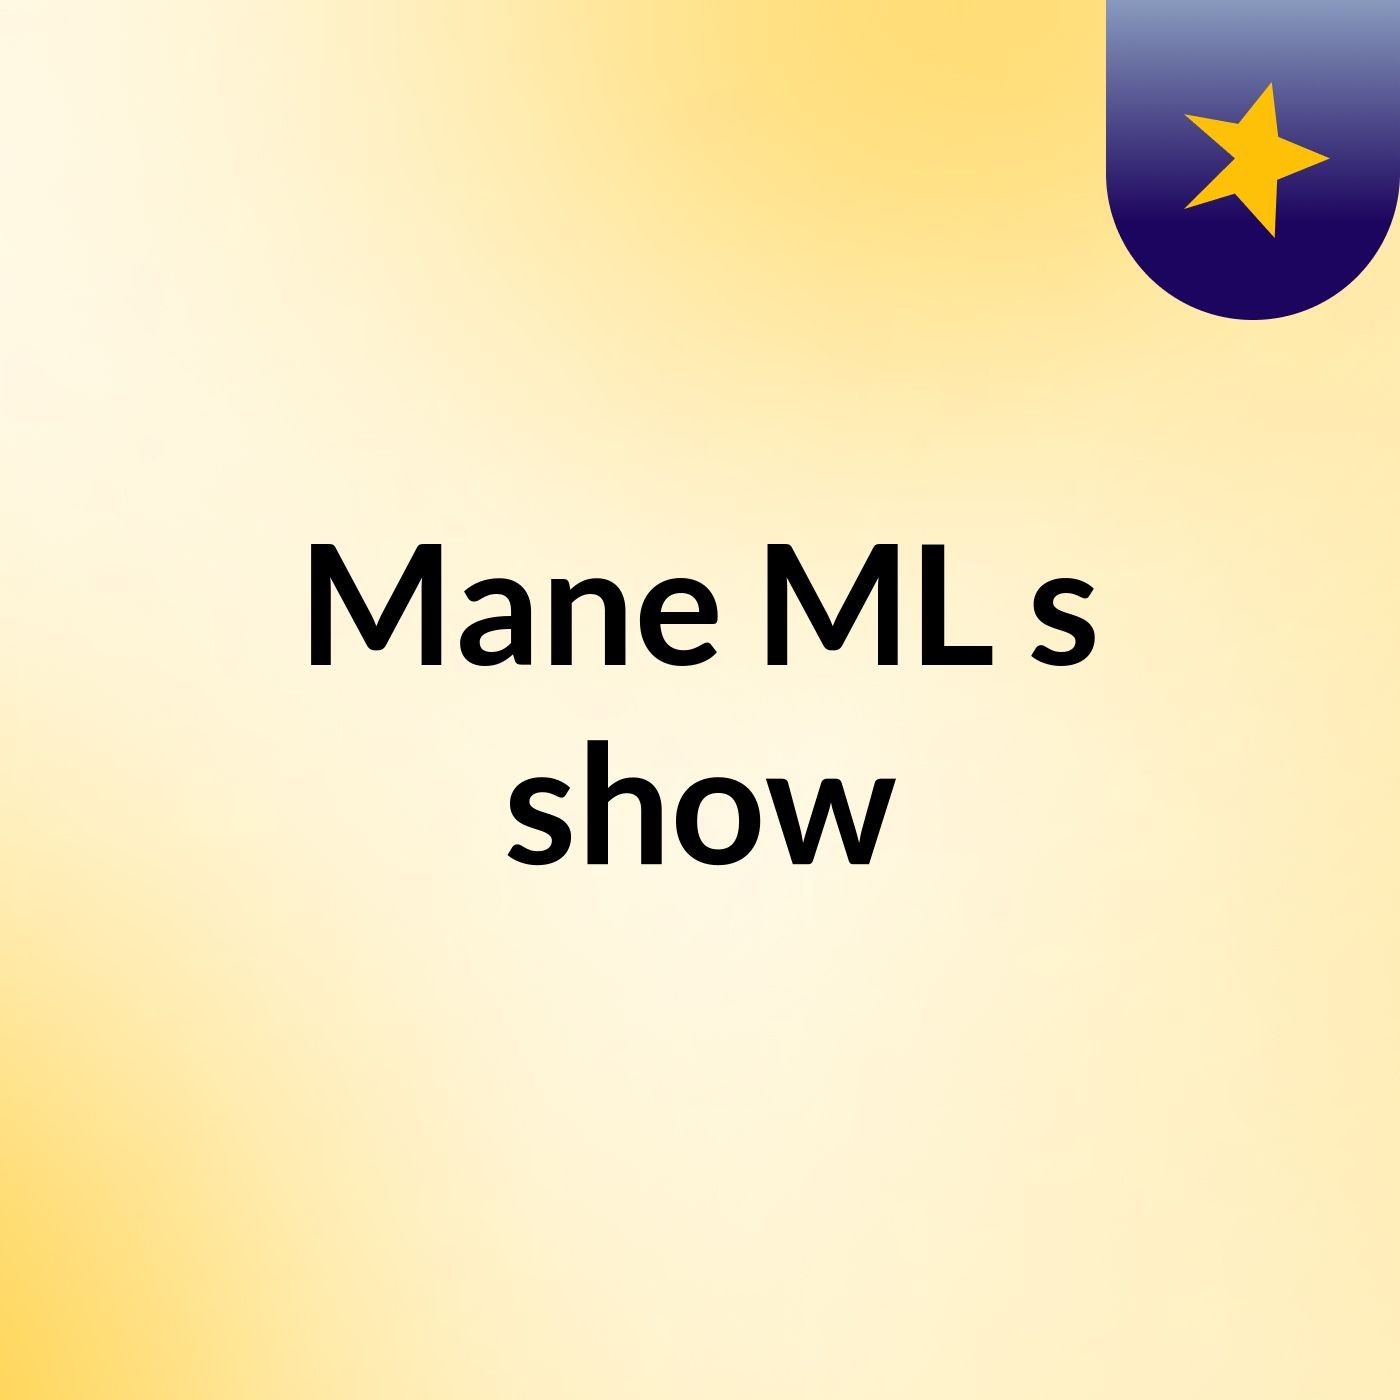 Mane ML's show